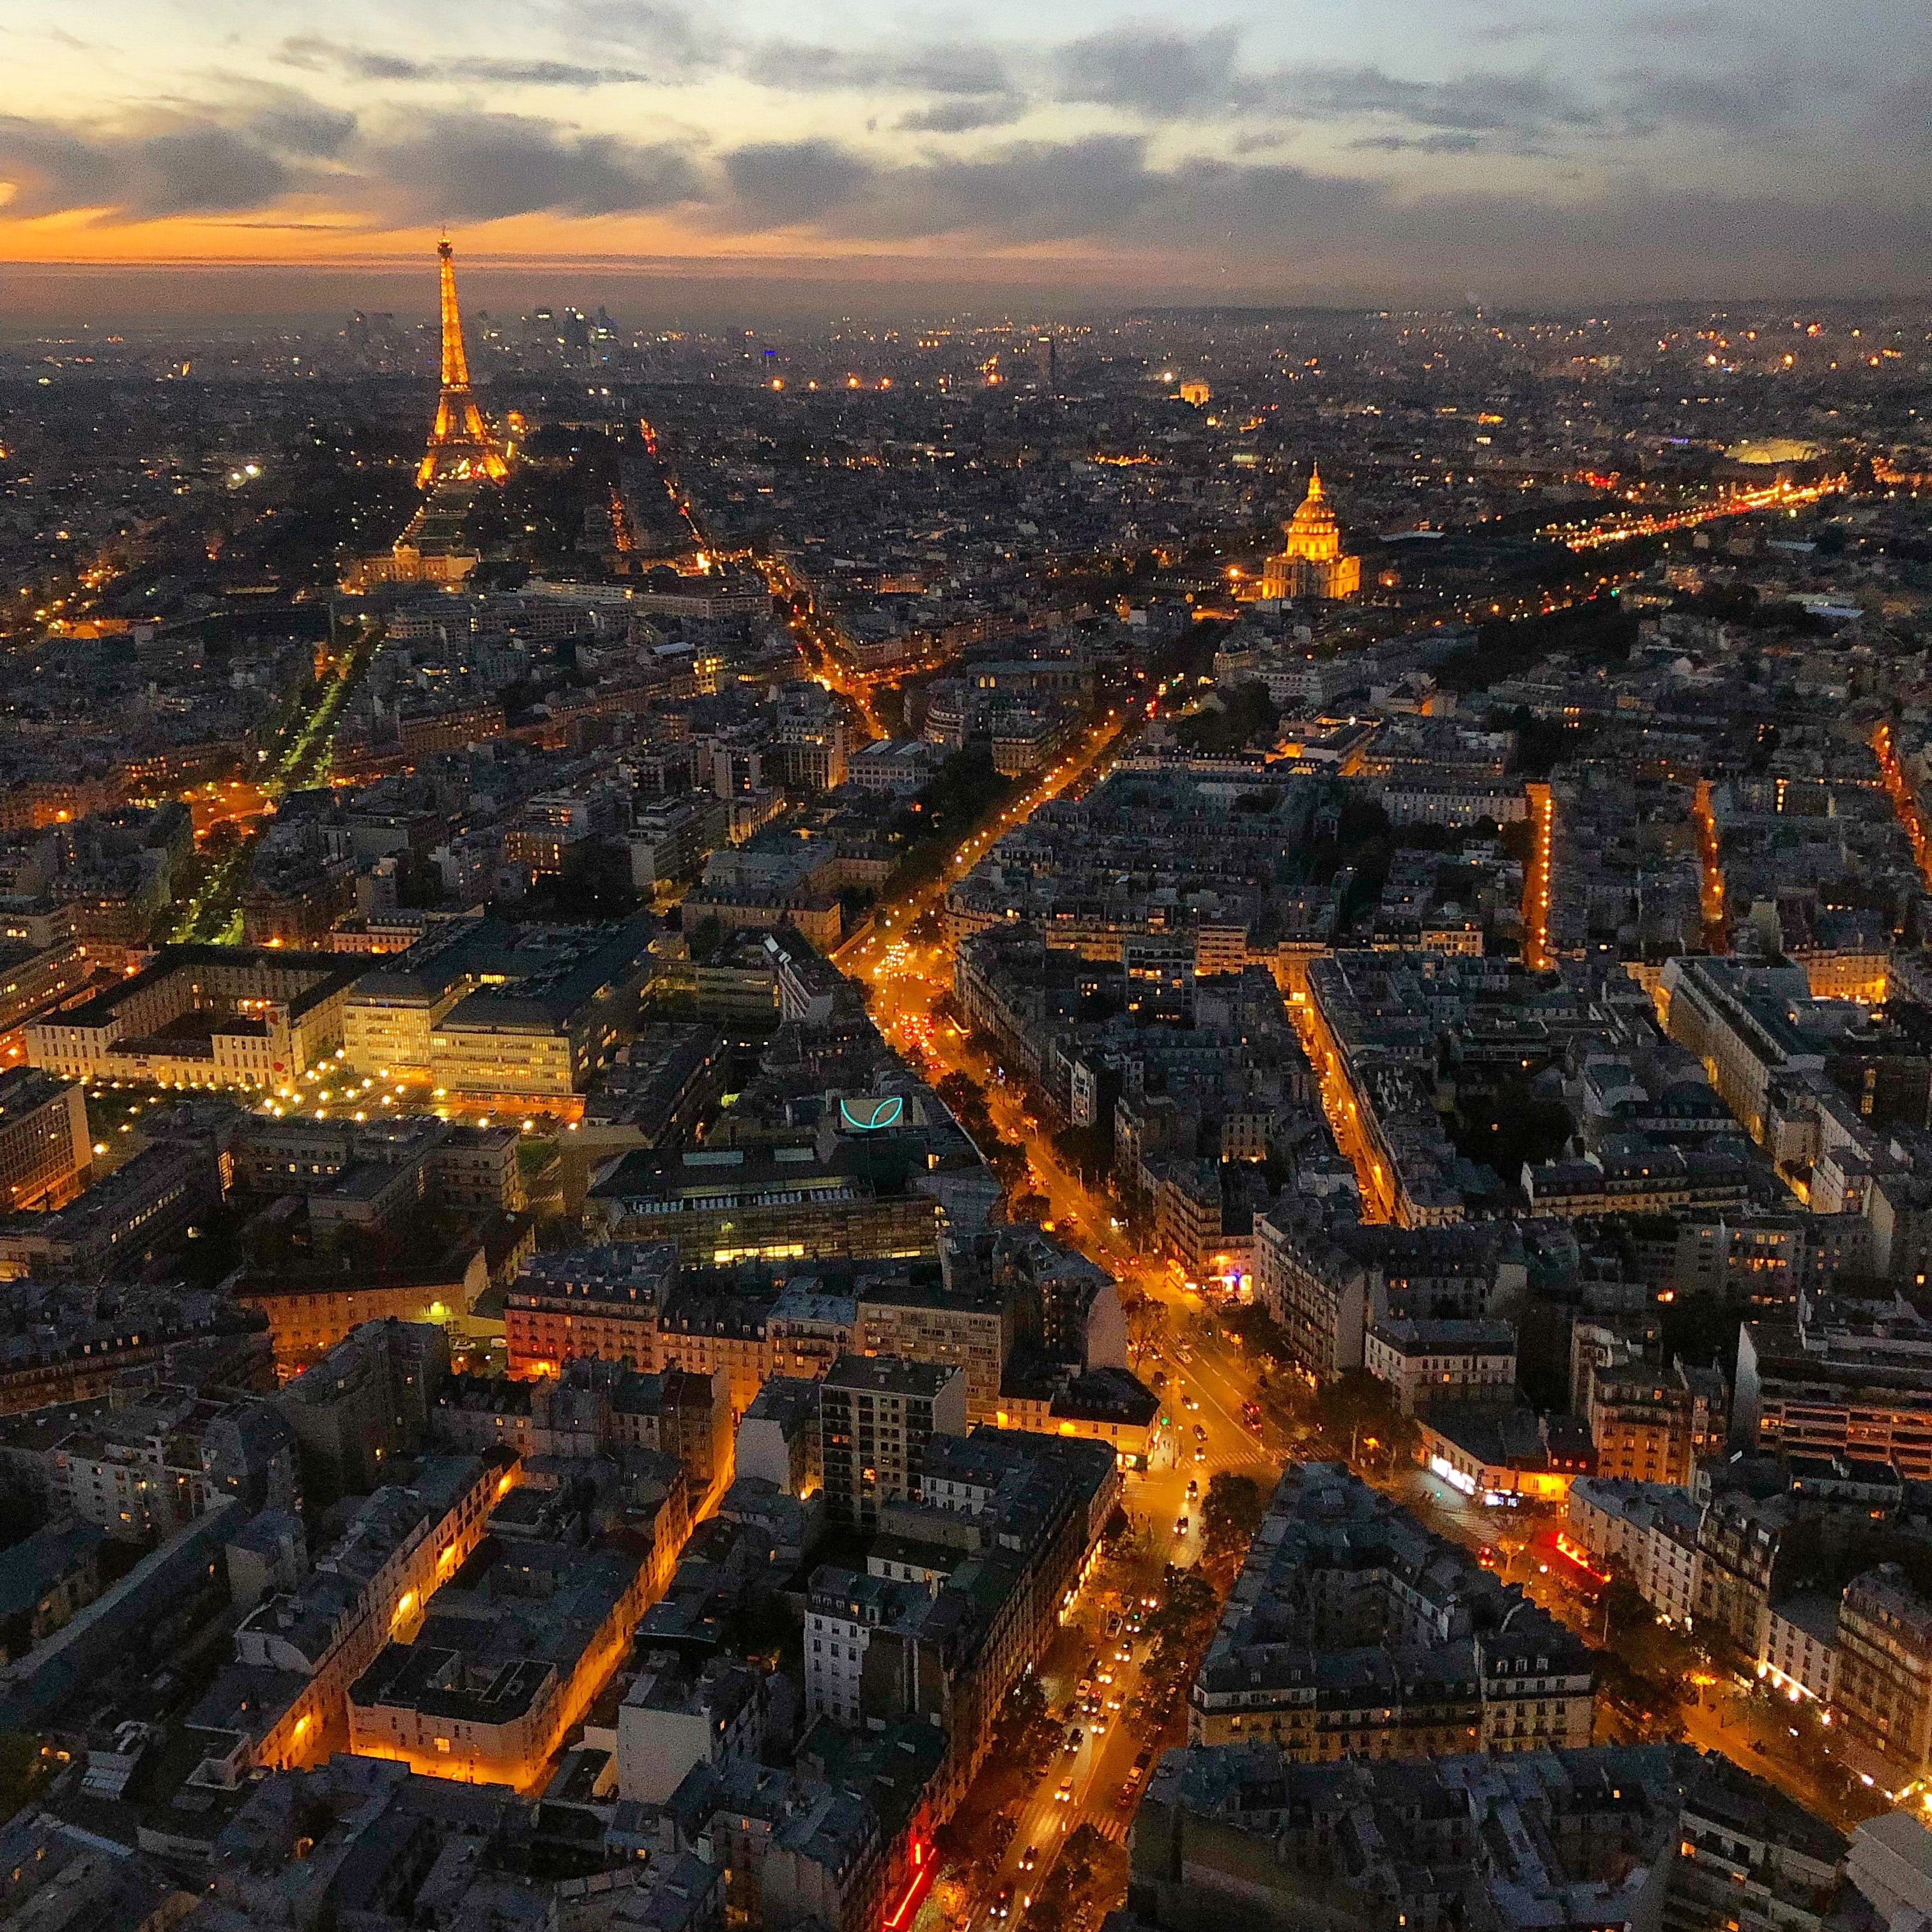 Bird eye view of the city, in Paris


